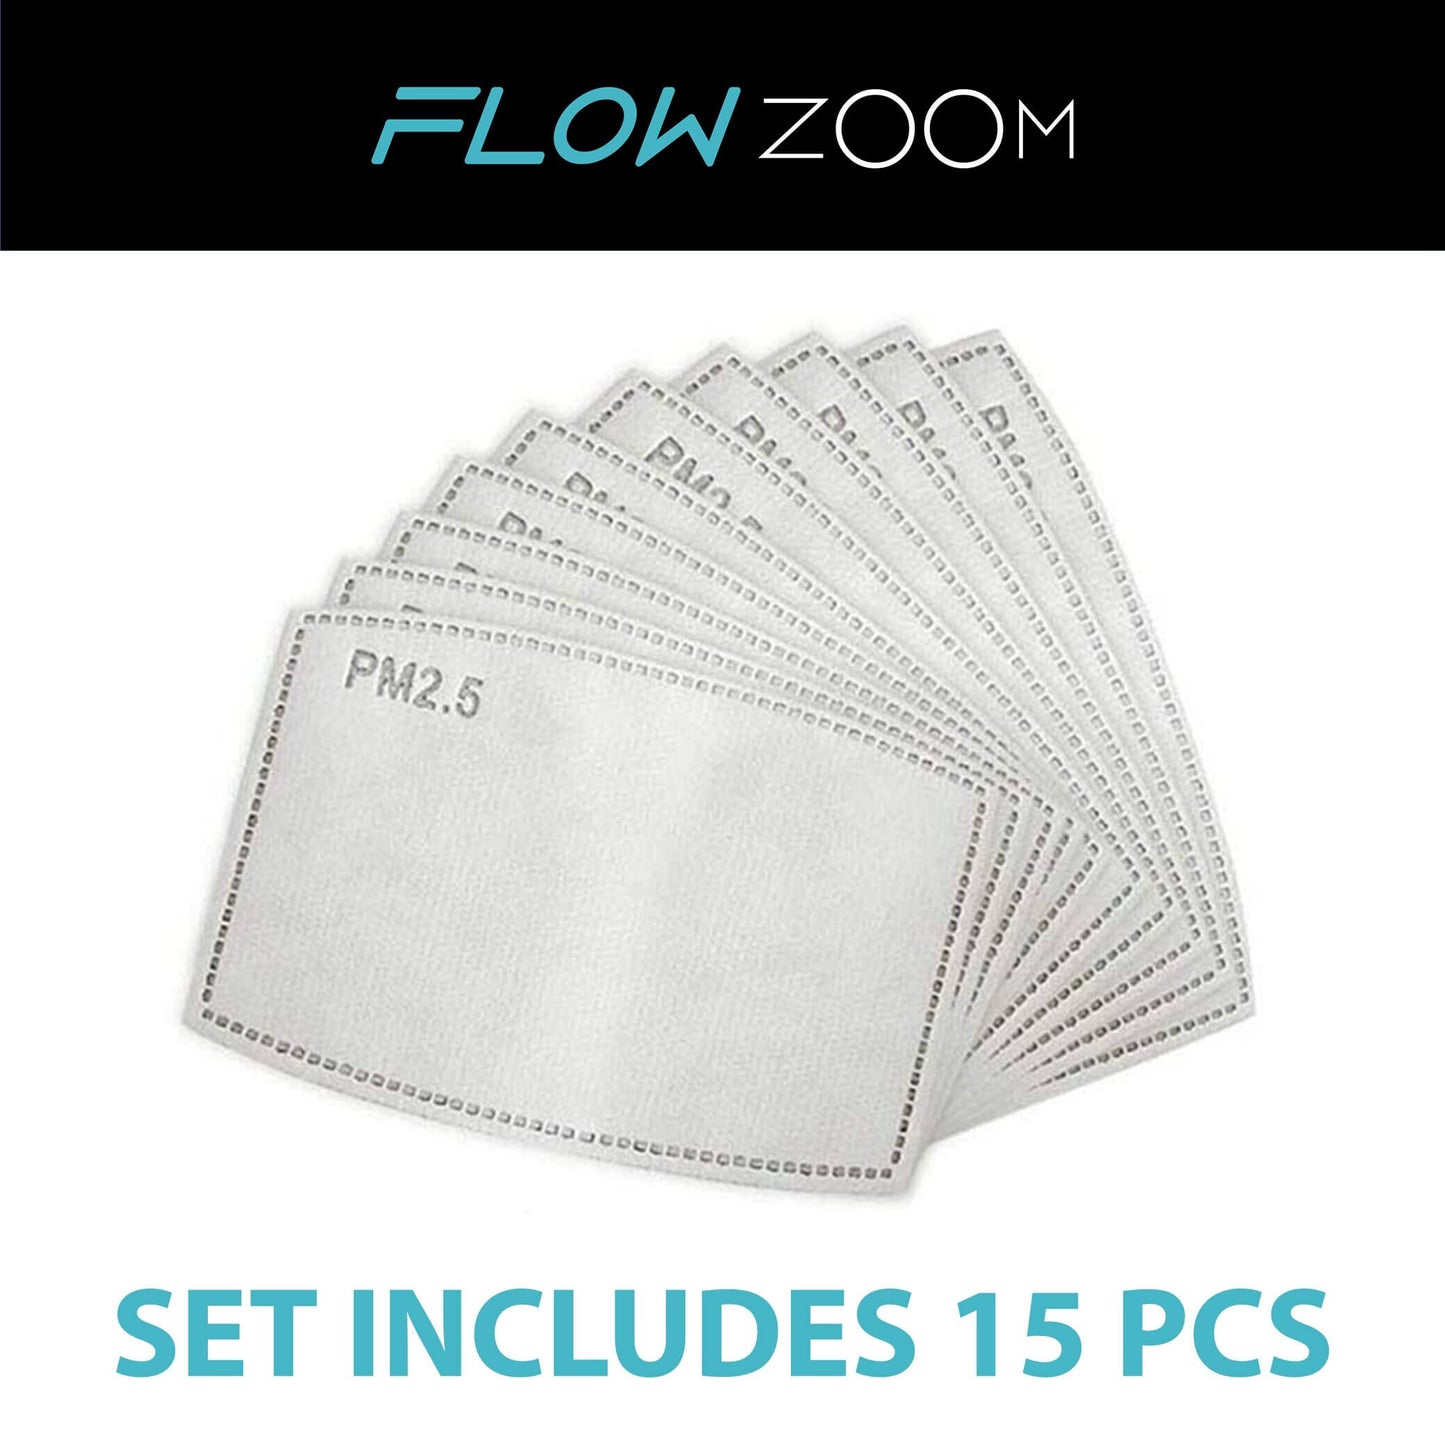 FLOWZOOM Filter for Face Mask - Includes 15 PCS Set